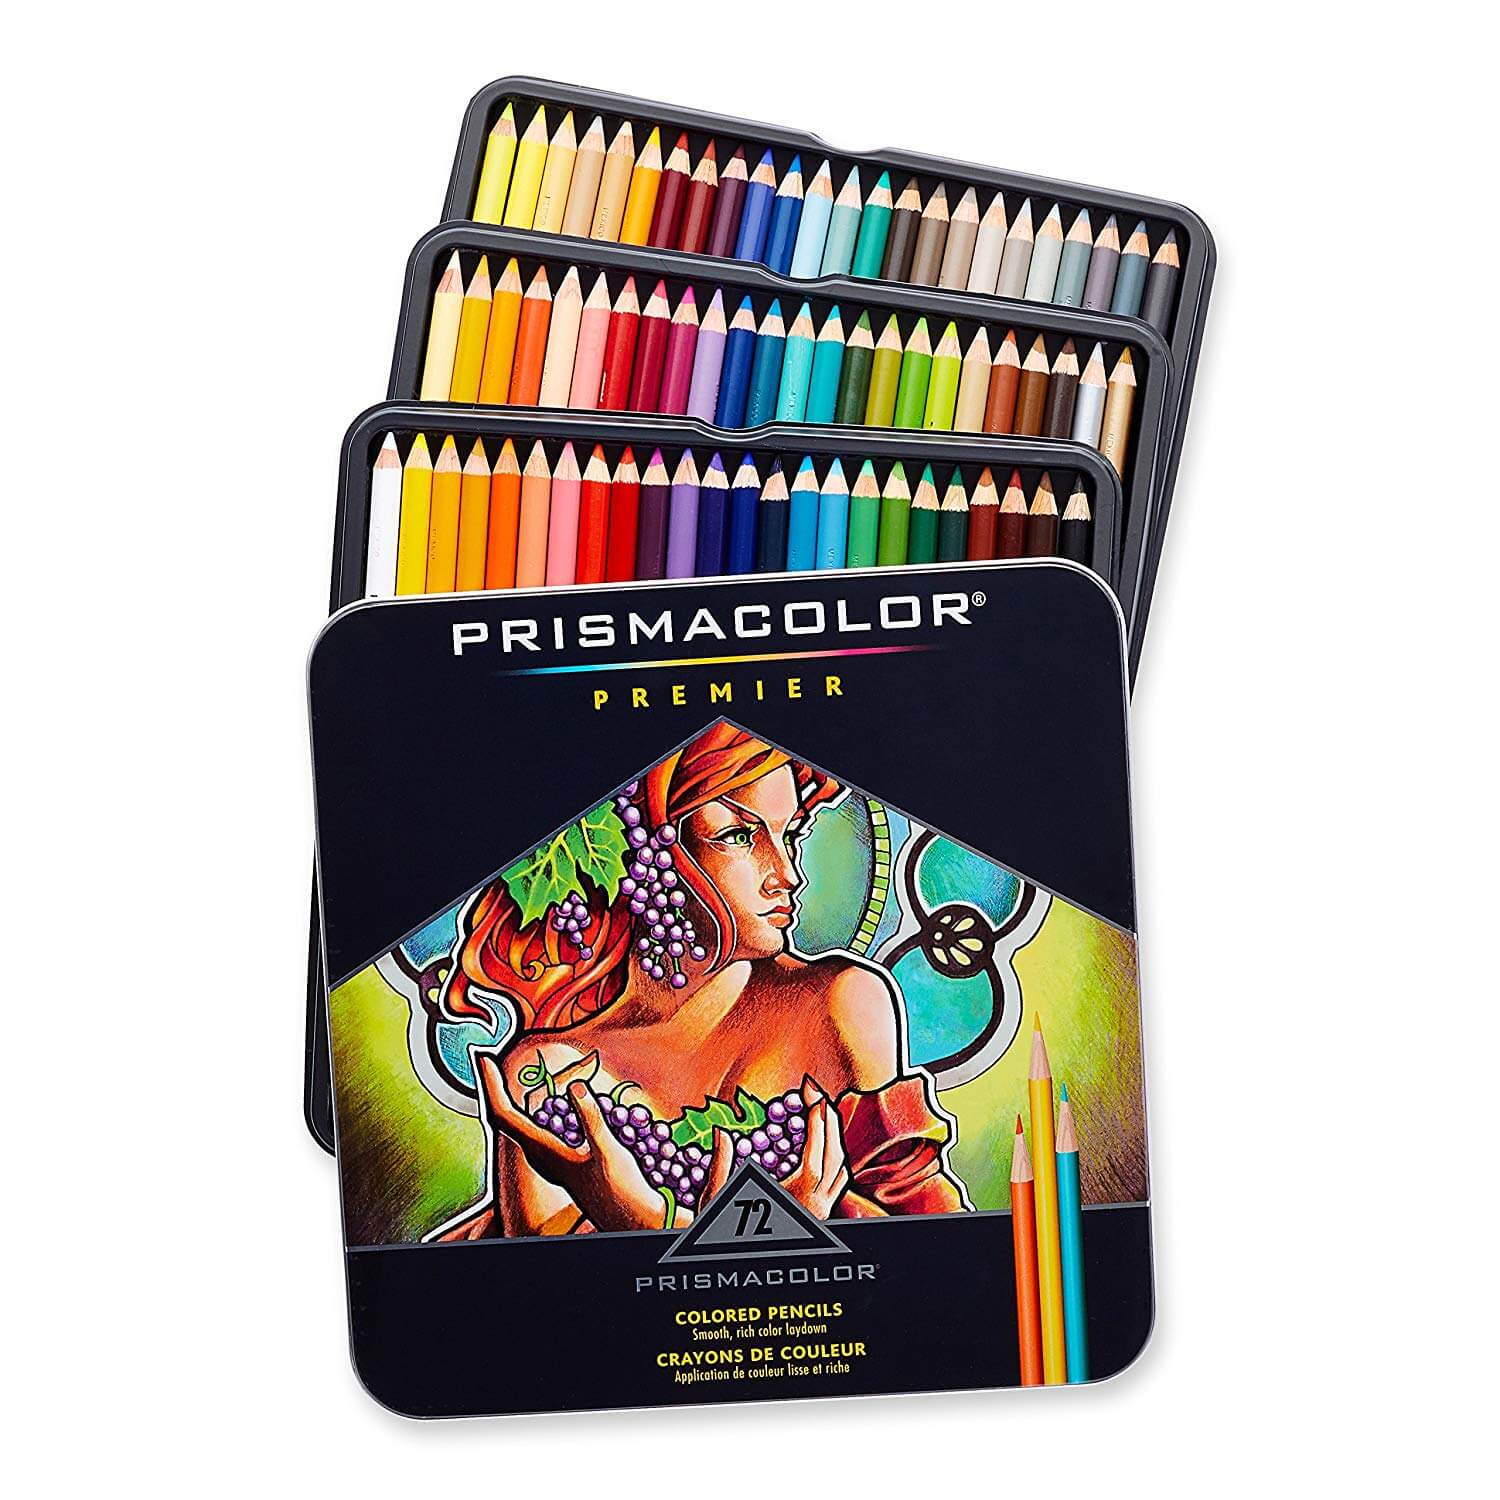 ColorIt Large Pencil Box Case Storage for Colored Pencils, Gel